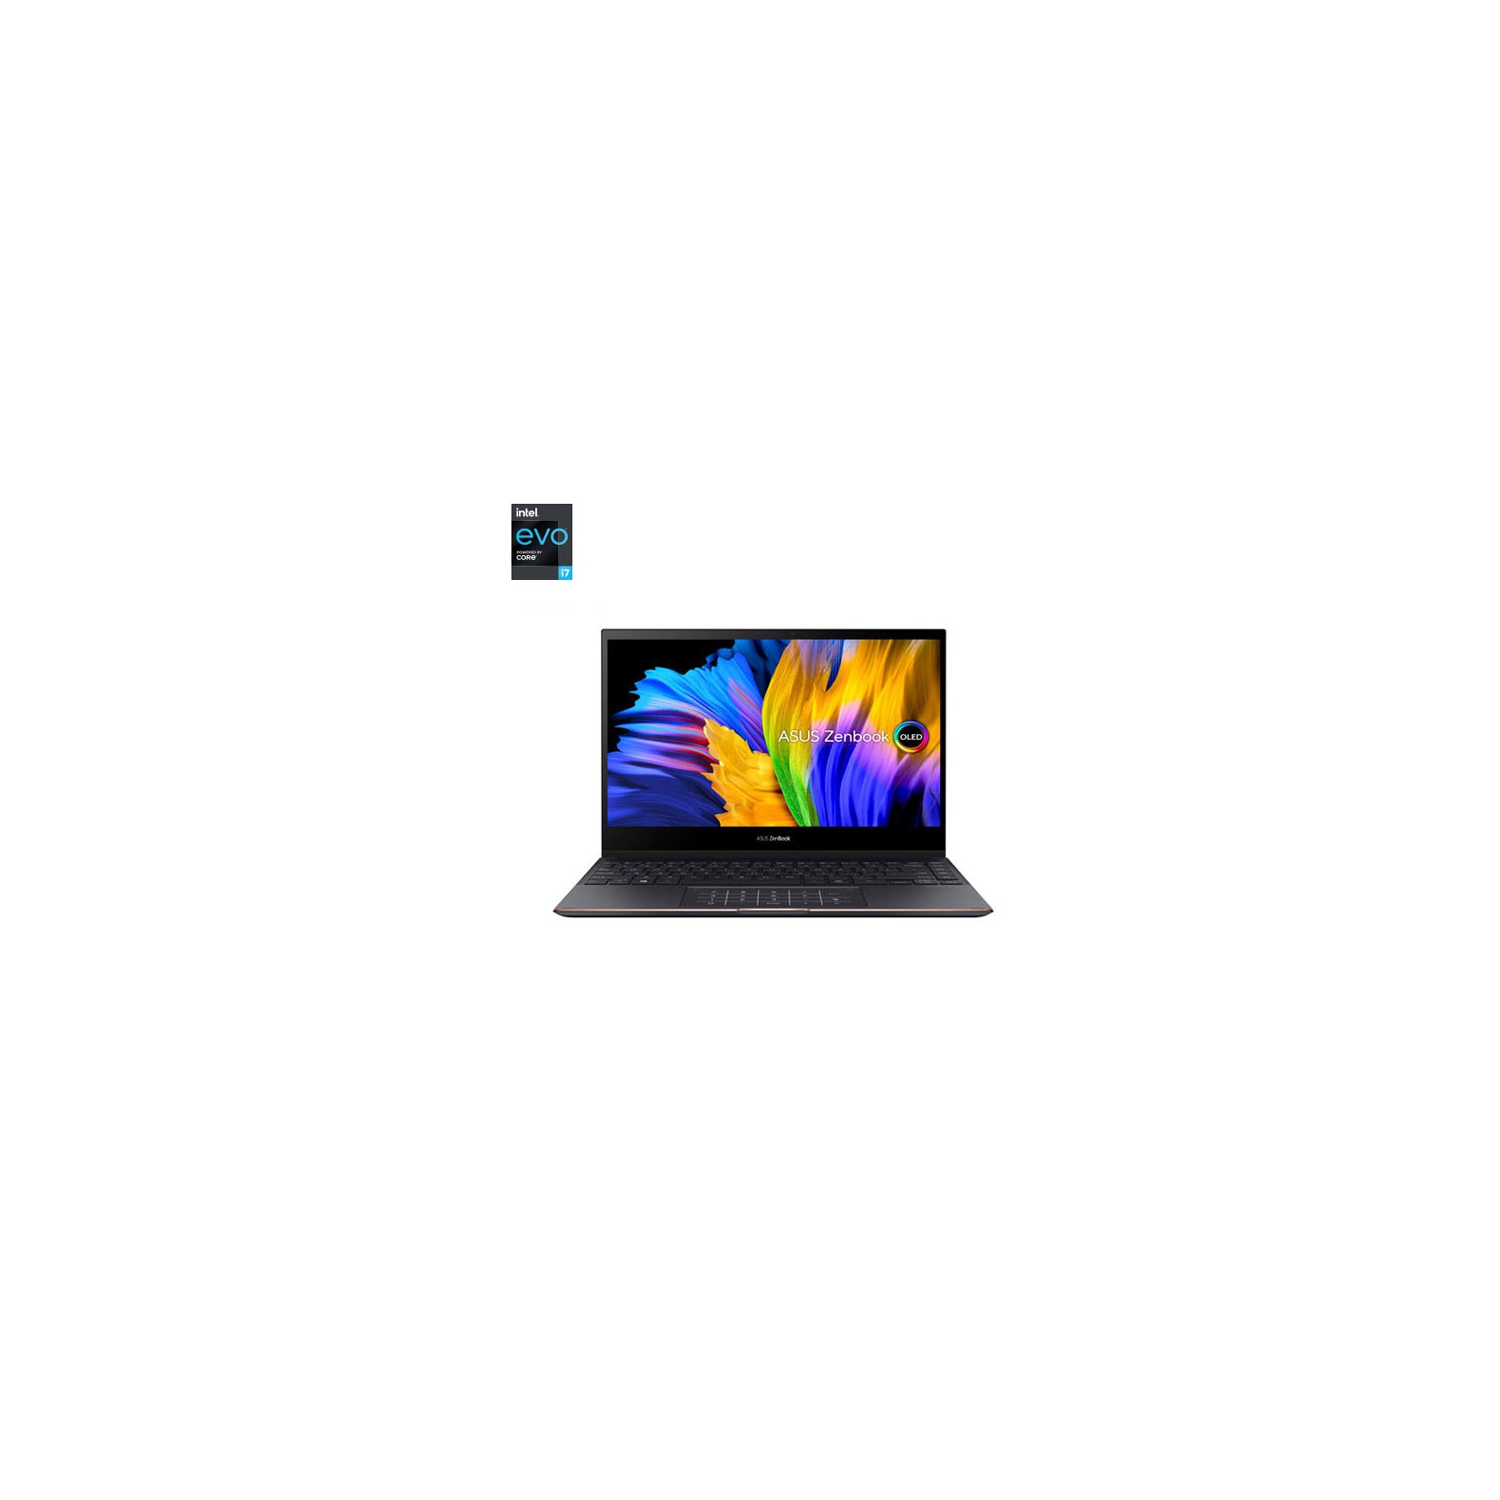 ASUS ZenBook Flip S13 OLED Ultra Slim Laptop, 13.3” 4K UHD OLED Touch Display, Intel Evo Core i7-1165G7 CPU, 16GB RAM, 1TB SSD, Thunderbolt 4, Windows 11 Pro, UX371EA-XH79T-CA